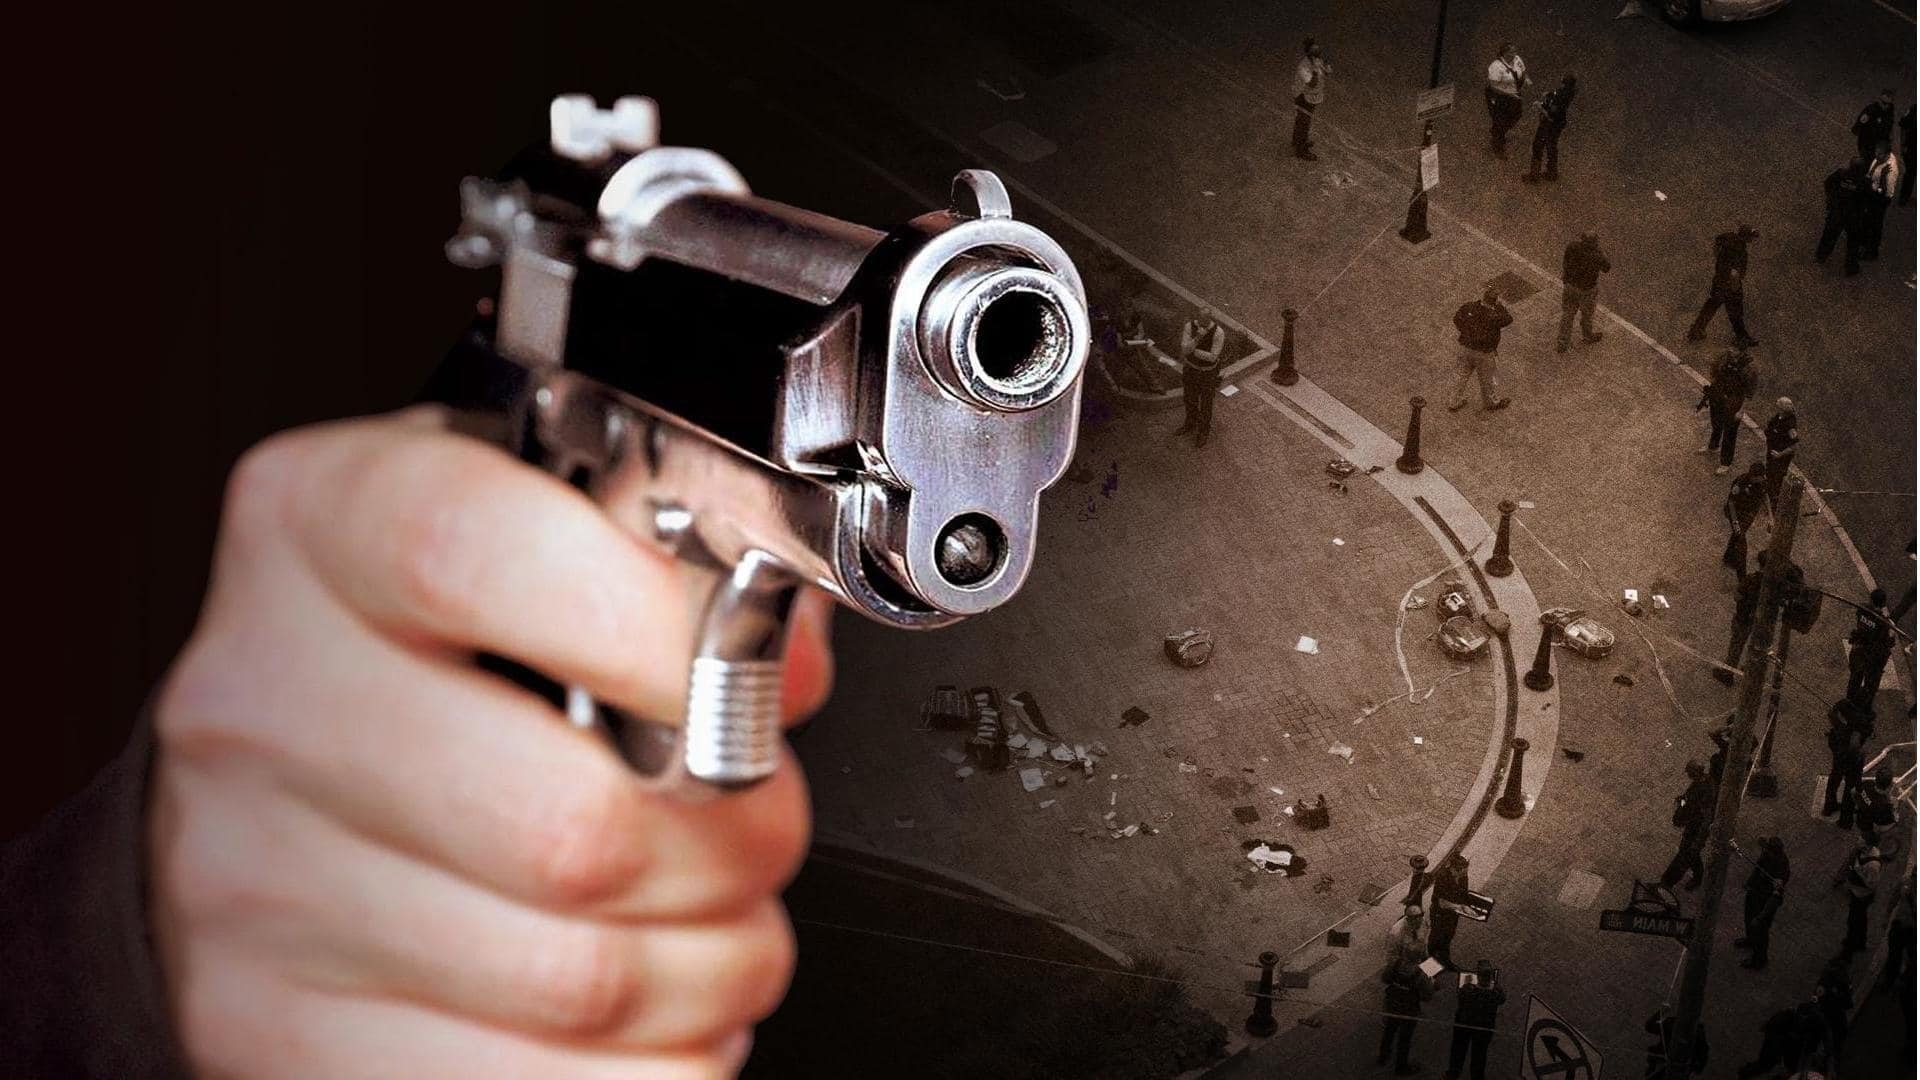 US: Las Vegas university shooter, who killed 3, was professor